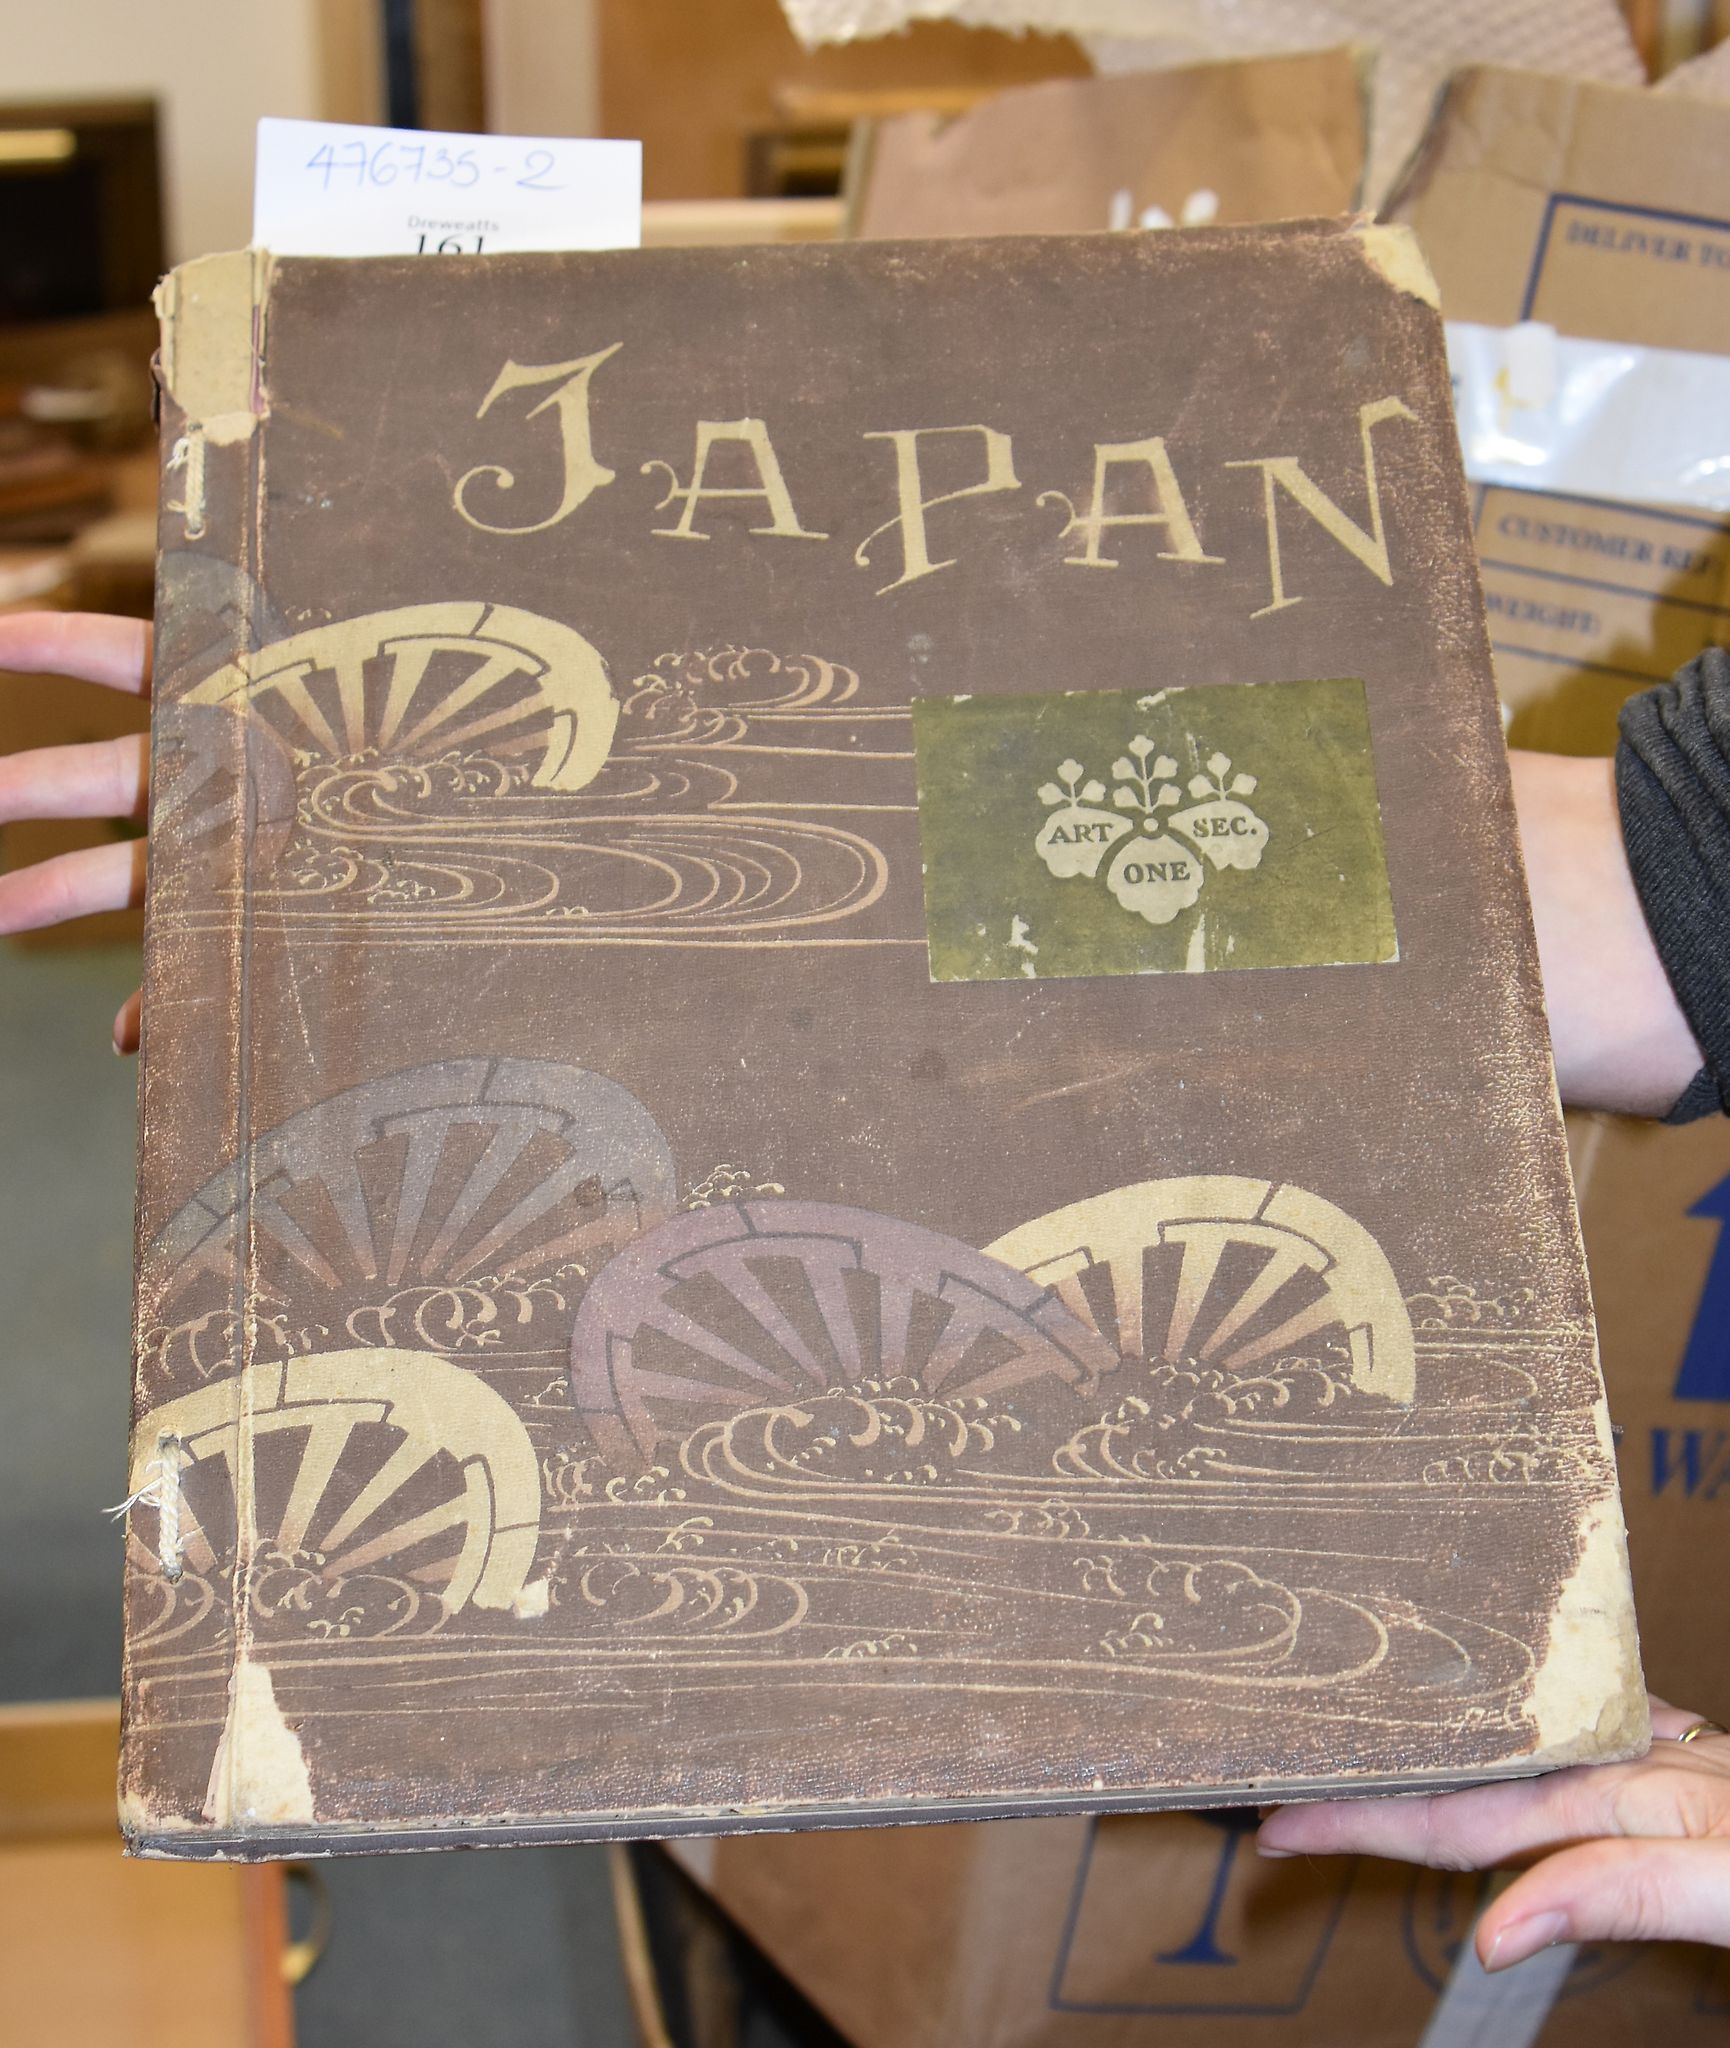 Brinkley, Capt. F.; The Art of Japan, Vols 1 & 2., 1901, published by J. B. Millet Company, Boston